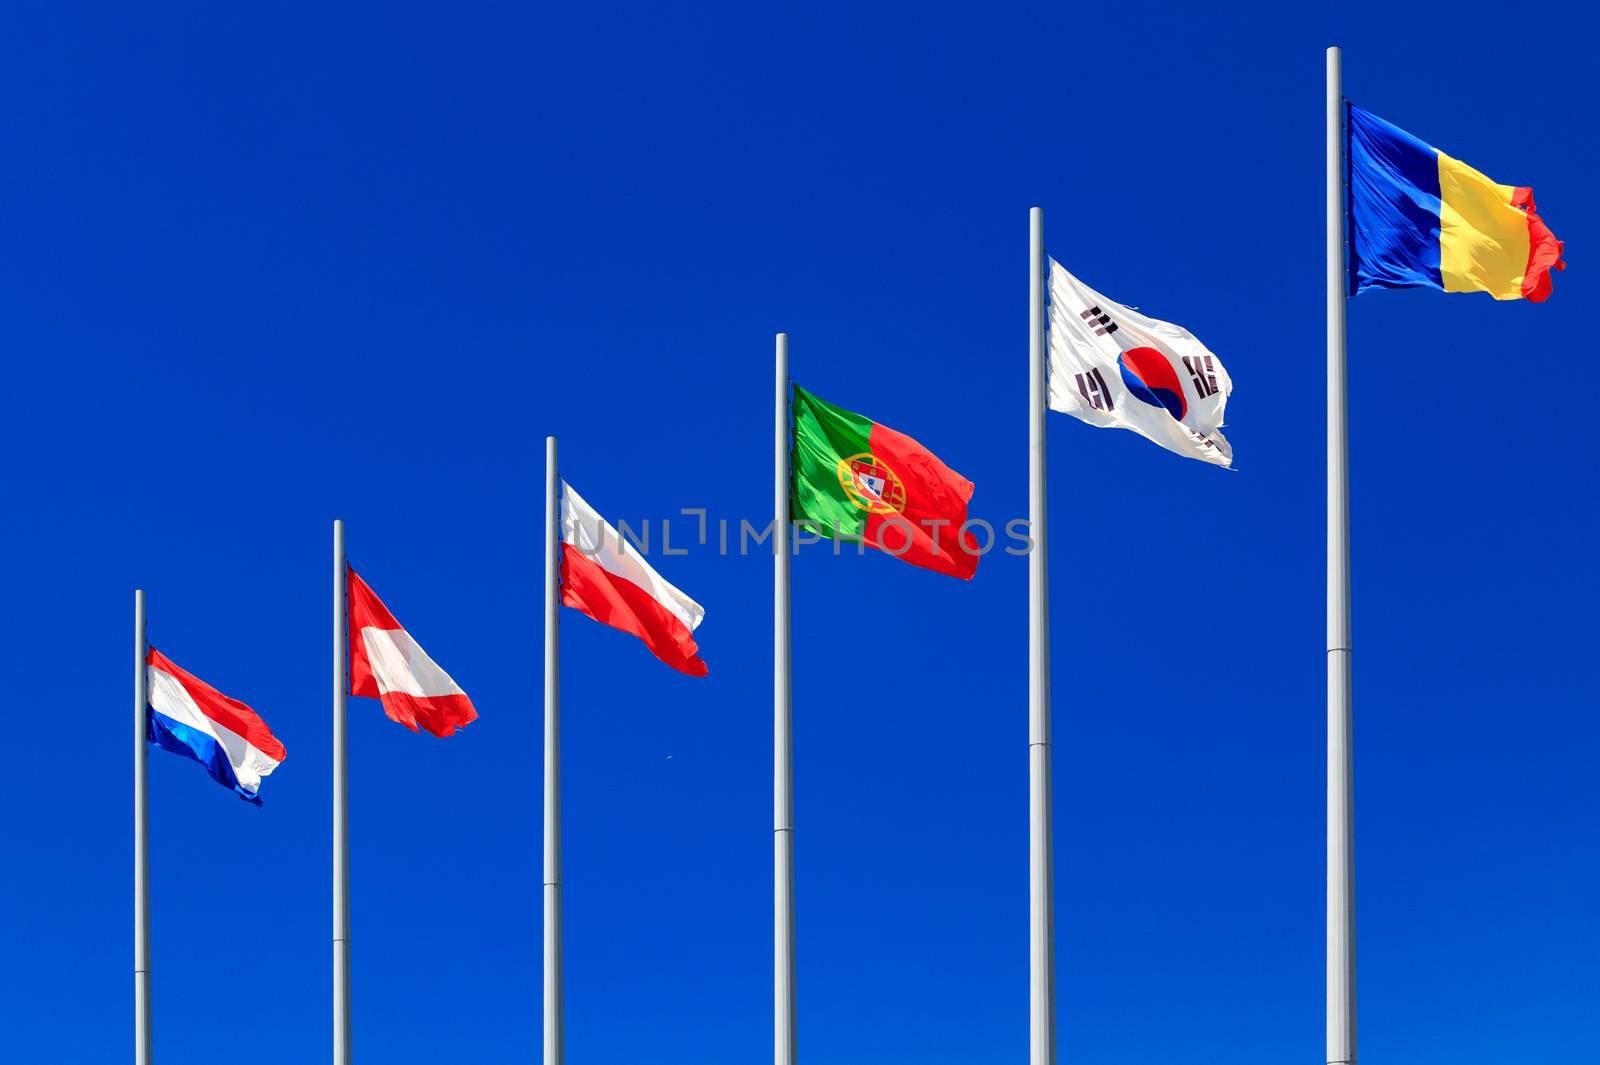 International flags against a blue sky by Nobilior